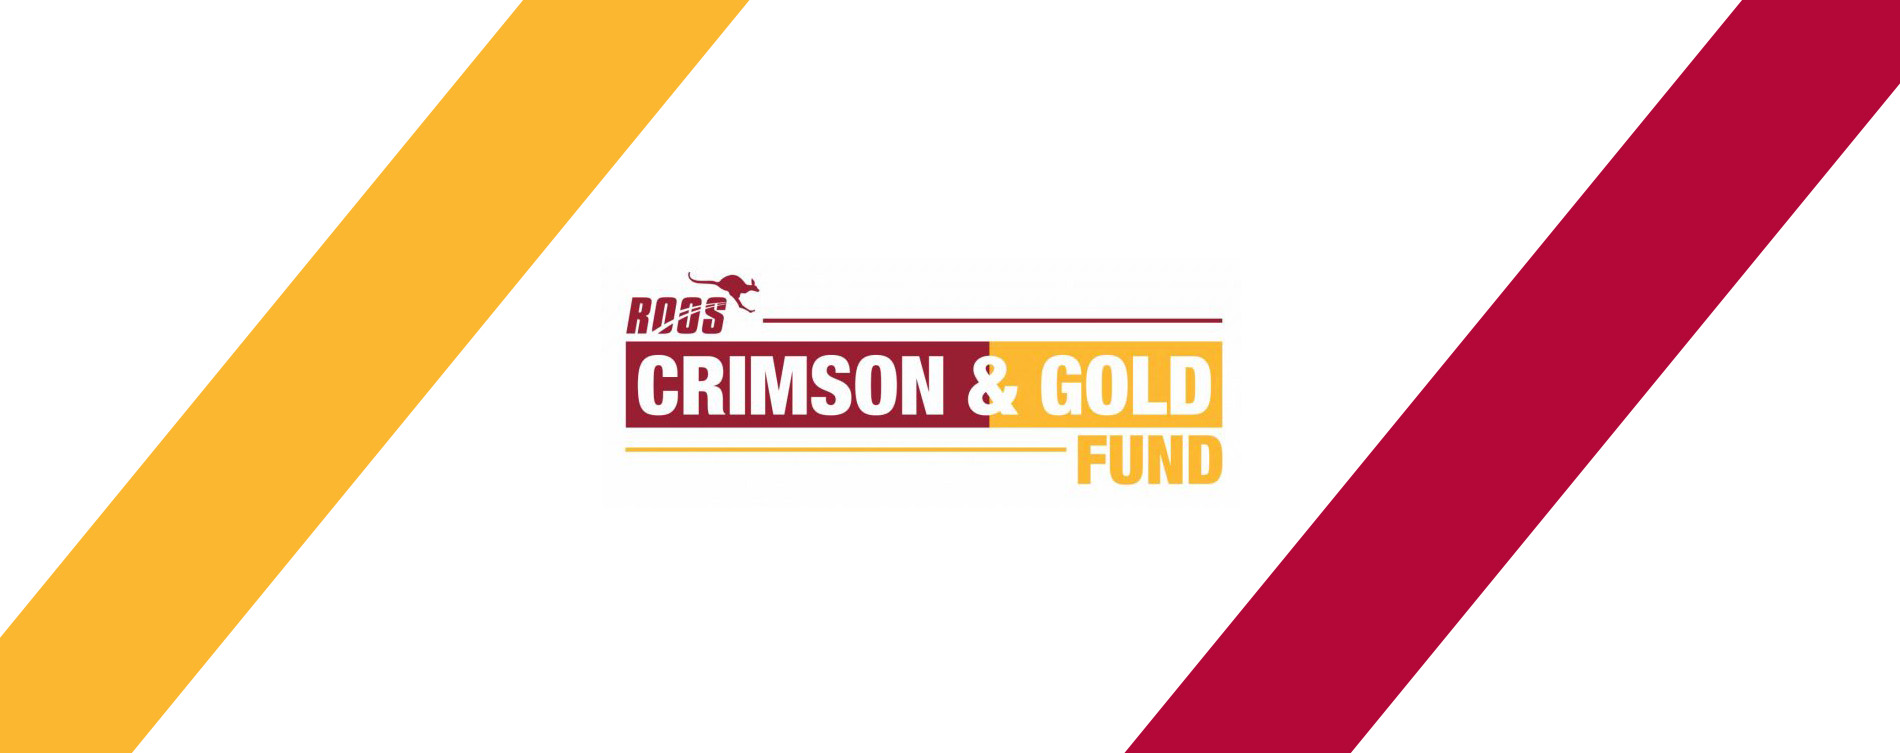 Austin College Launches Crimson & Gold Fund